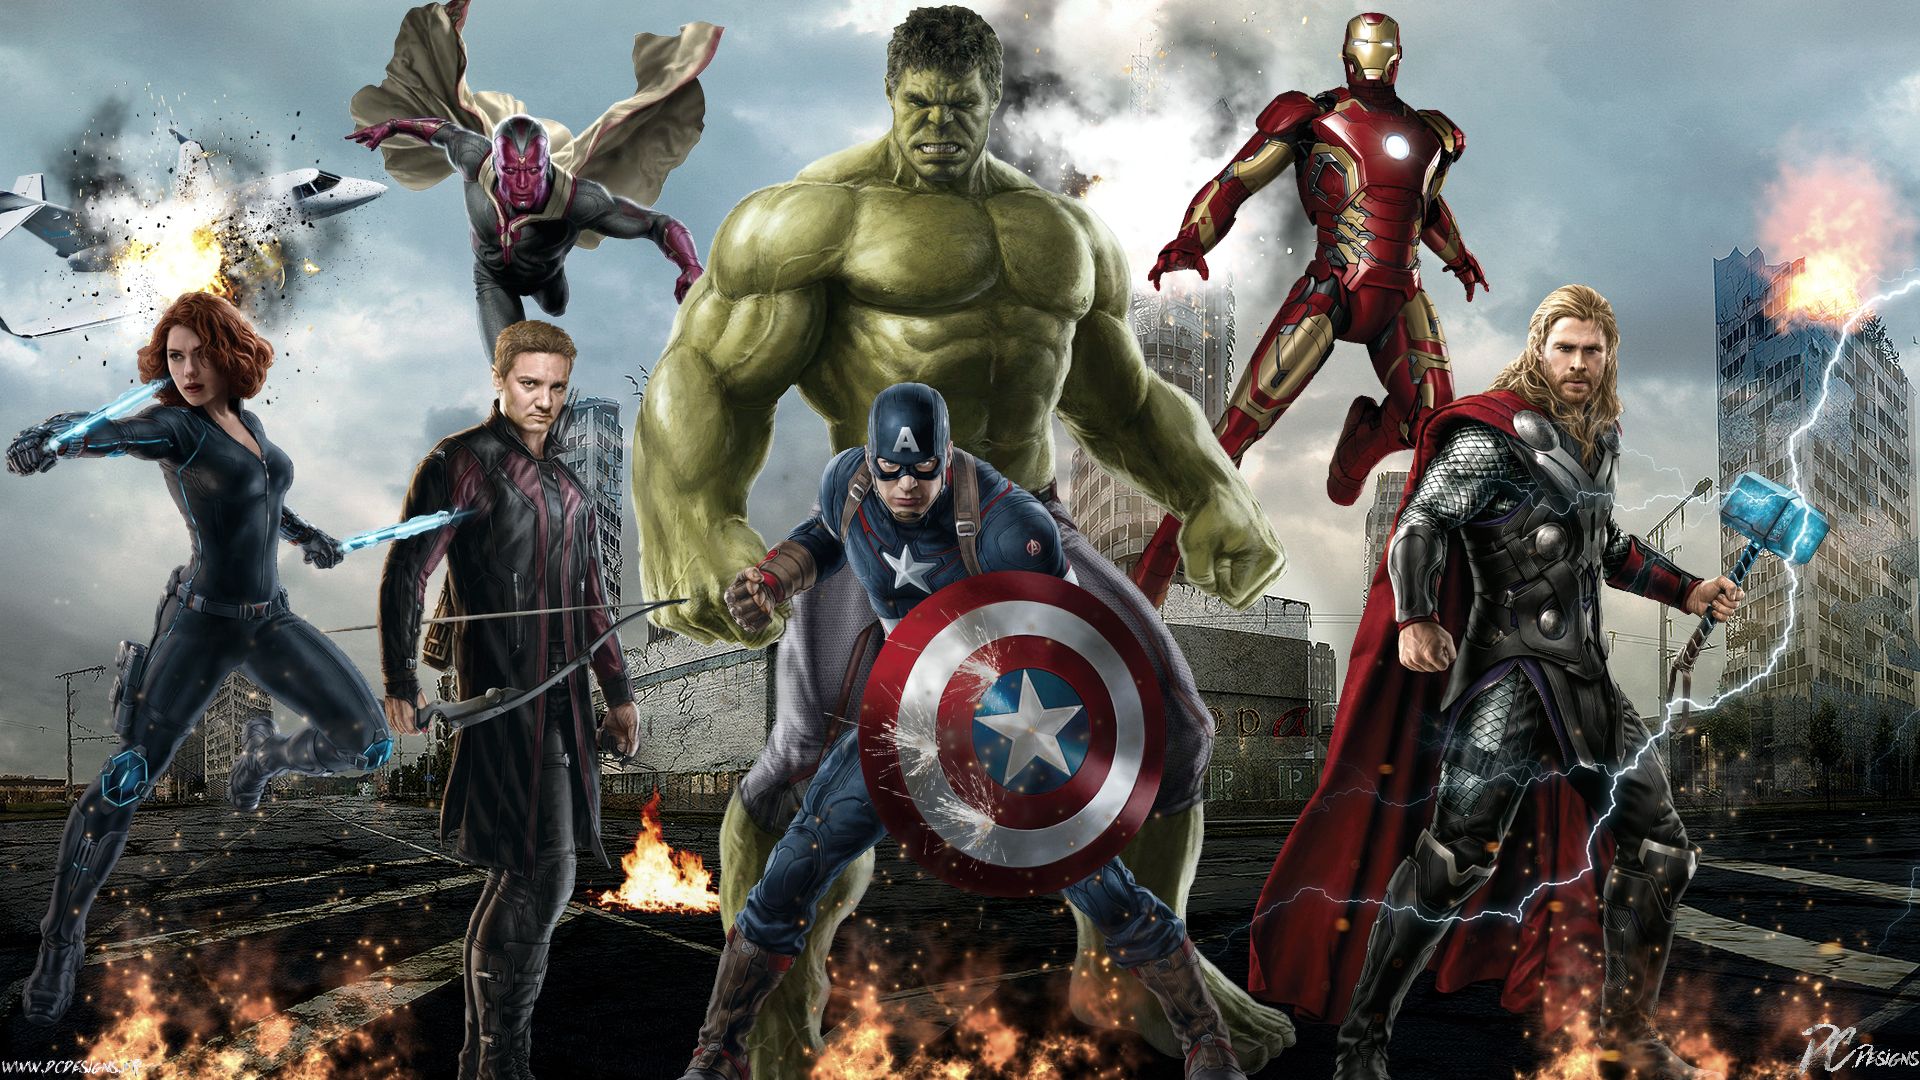 movie, avengers, captain america, chris hemsworth, hulk, avengers: age of ultron, thor, iron man, vision (marvel comics), black widow, chris evans, hawkeye, jeremy renner, poster, scarlett johansson, the avengers